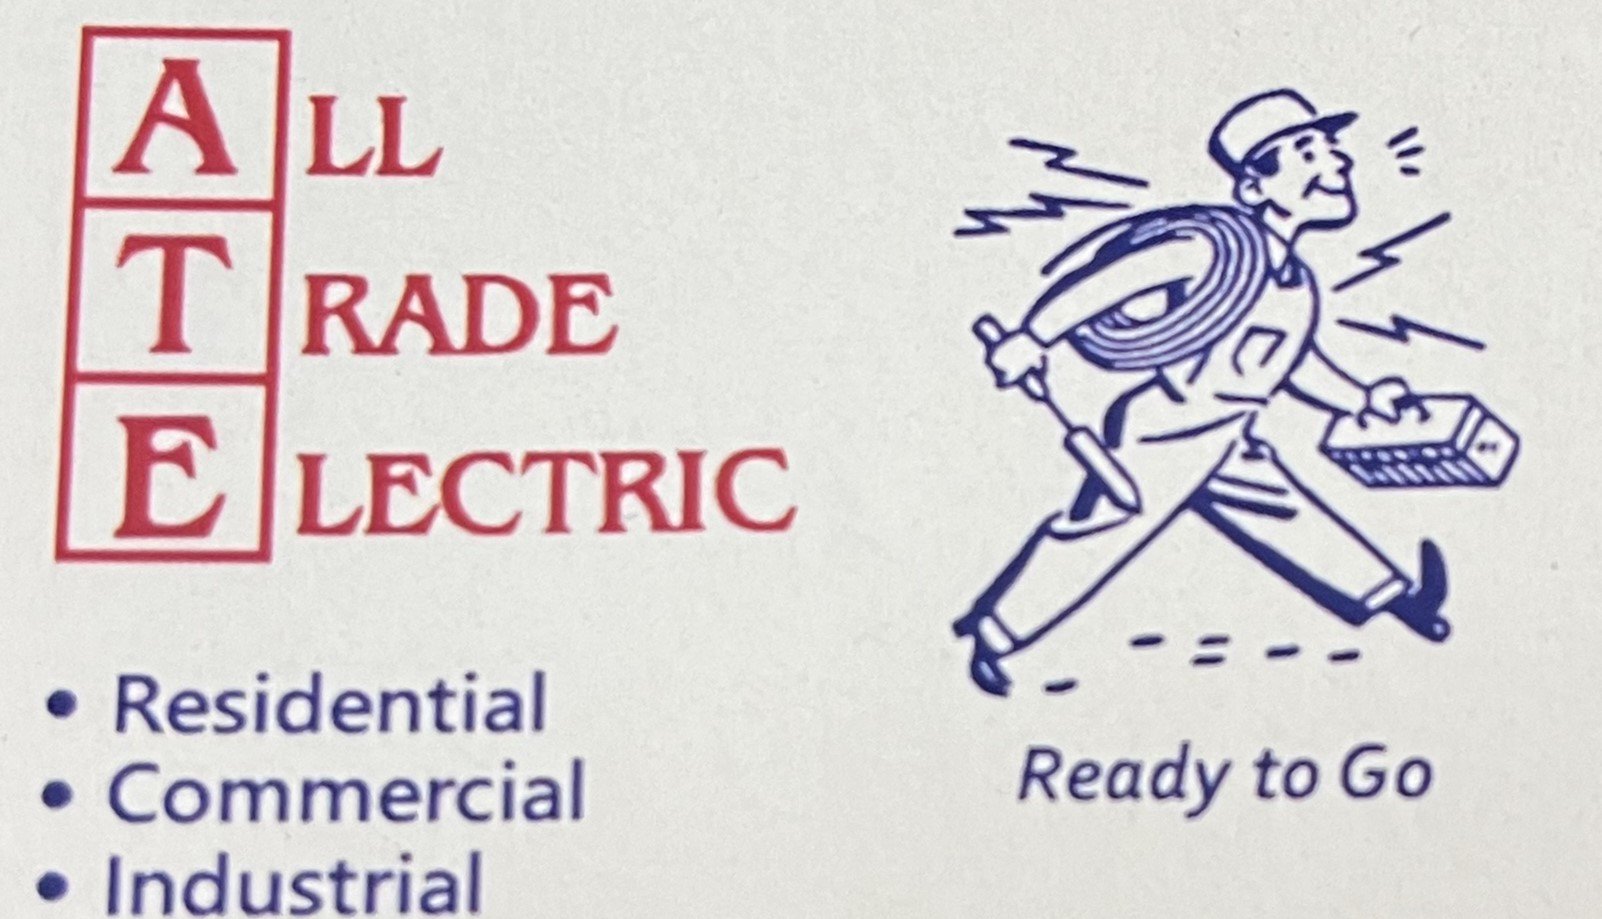 All Trade Electric Logo